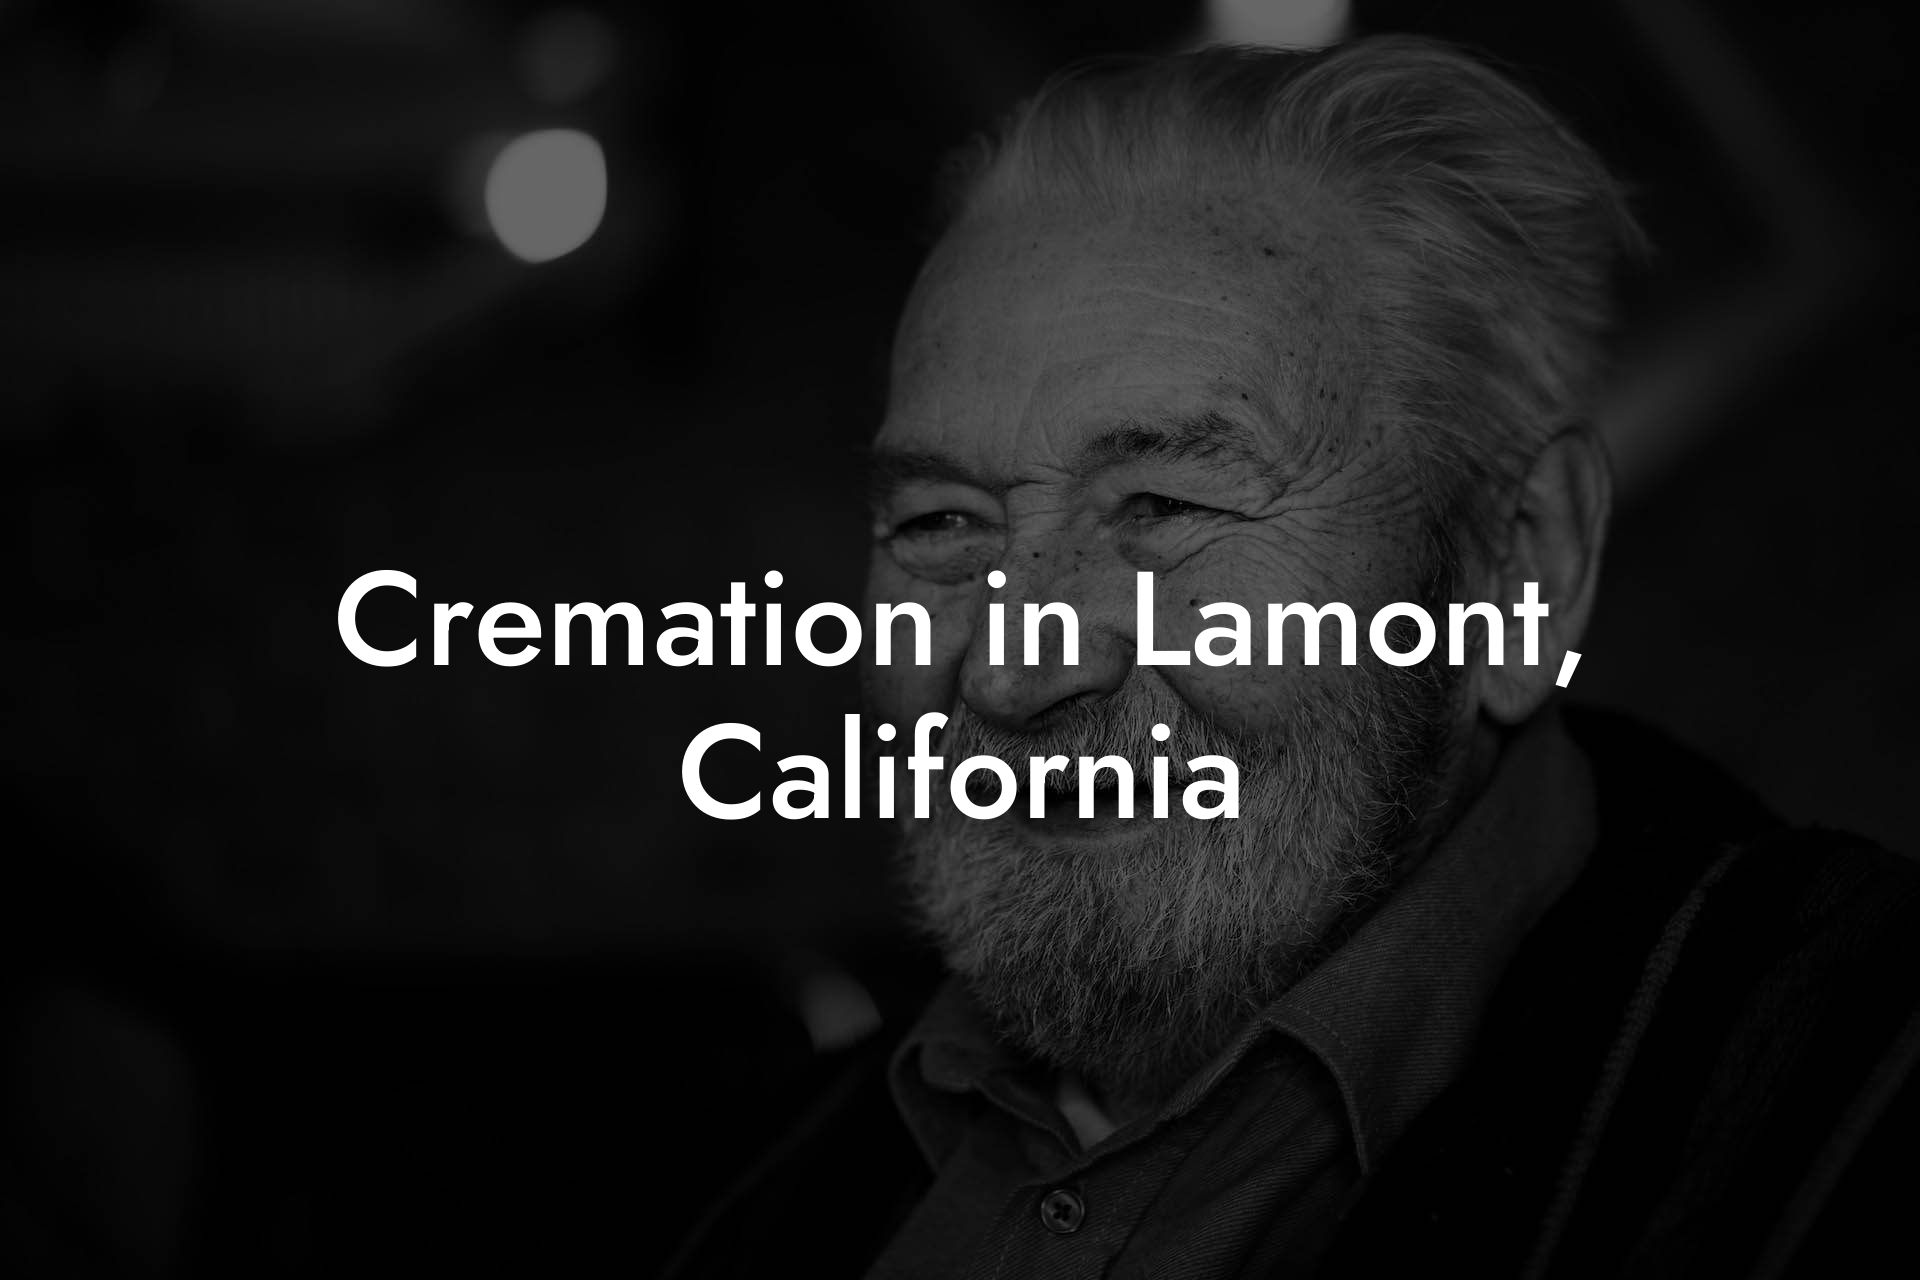 Cremation in Lamont, California